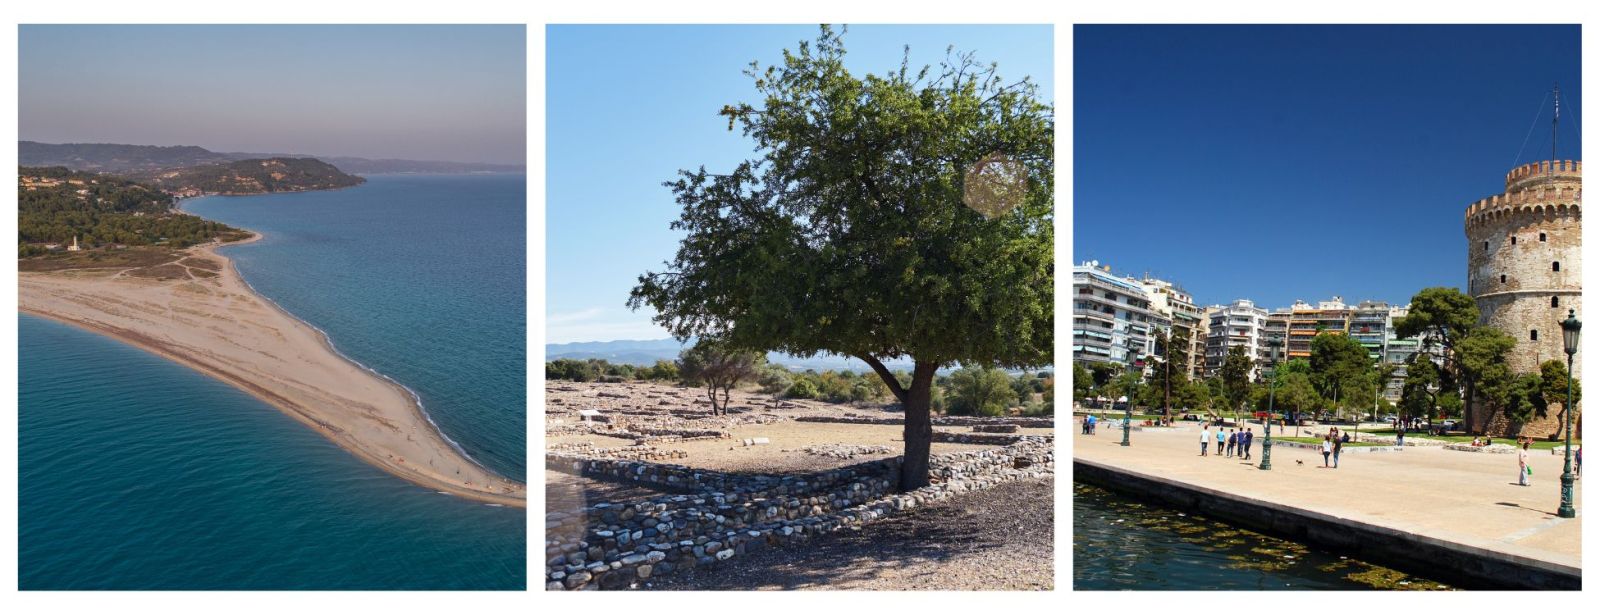 Halkidiki Holidays. Beaches, Ancient Ruins & city breaks